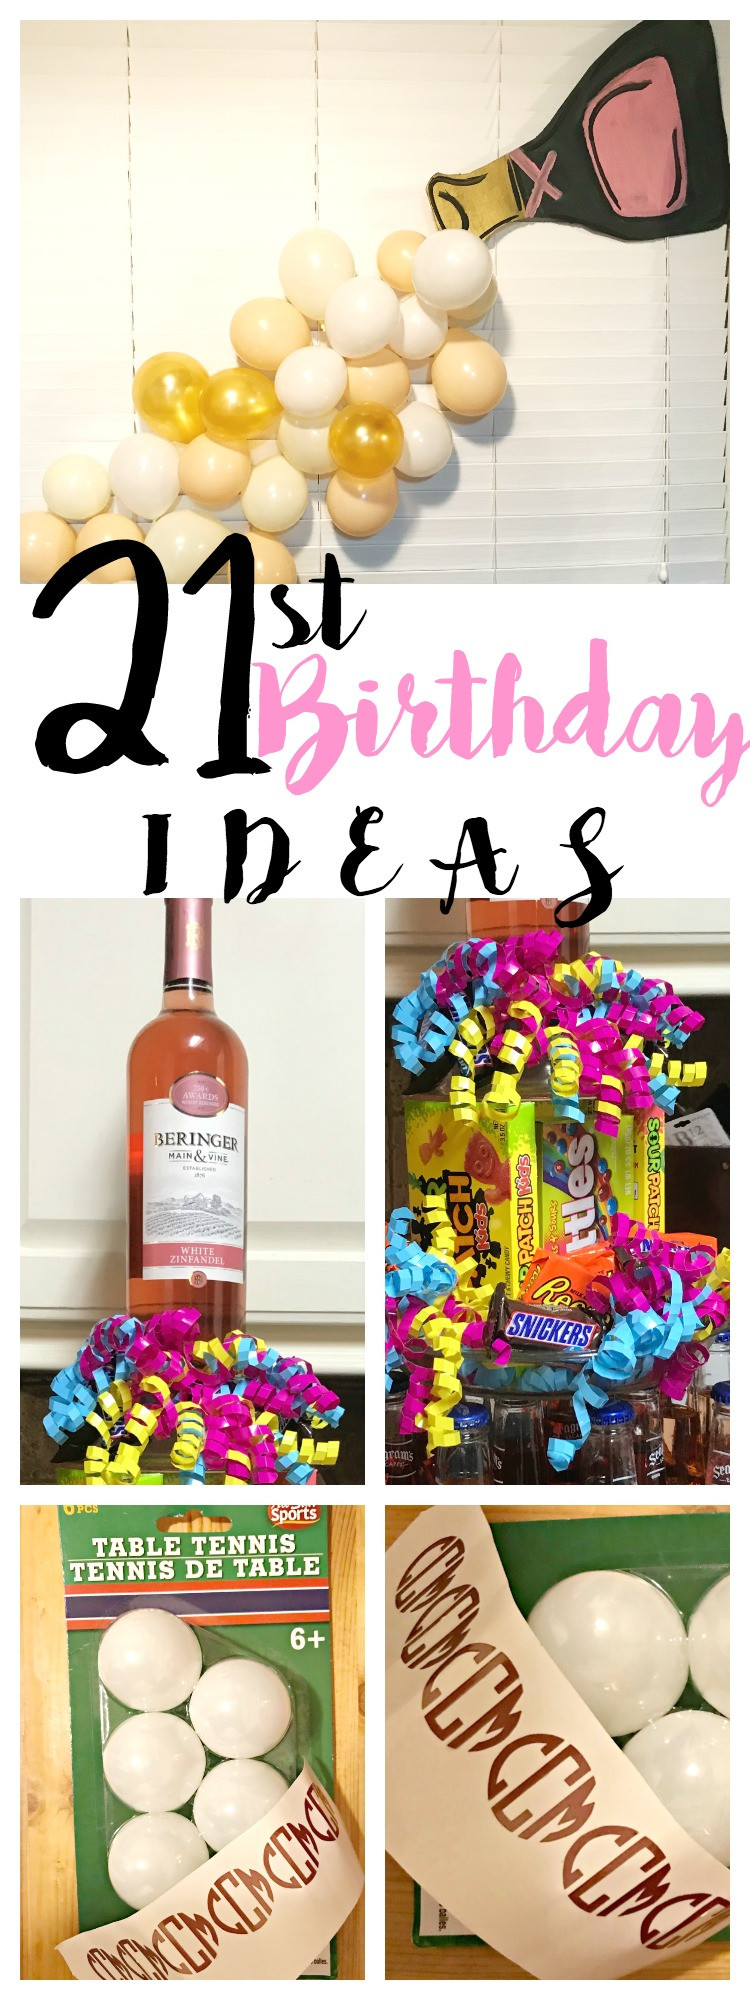 21st Birthday Decoration Ideas
 21st Birthday Party Ideas